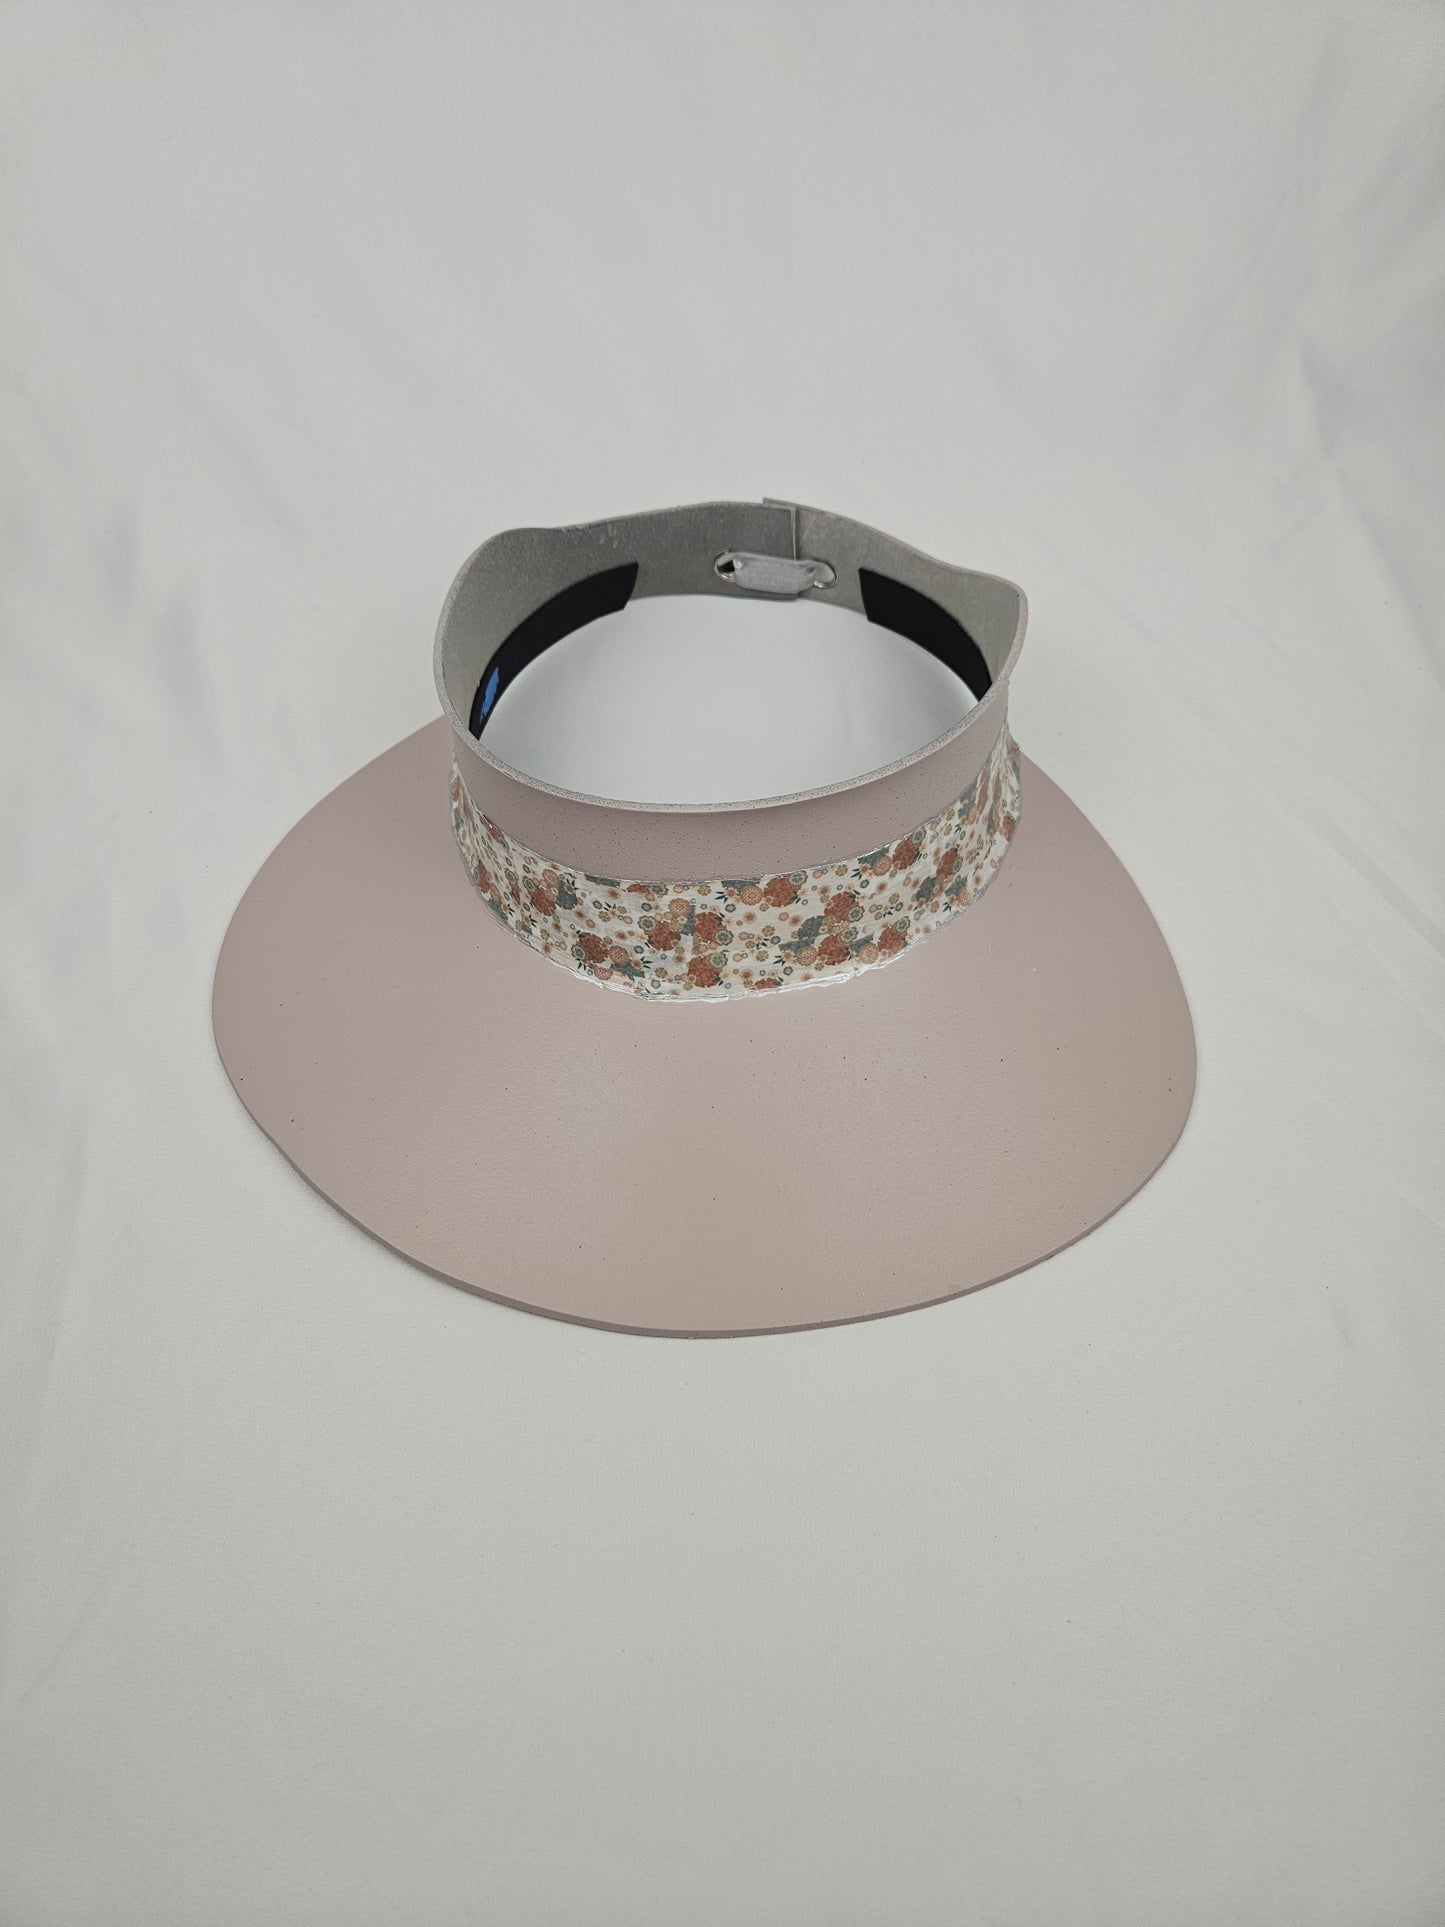 Soft Pink Audrey Sun Visor Hat with Soft Pink Floral Band: 1950s, Walks, Brunch, Asian, Golf, Easter, Church, No Headache, Derby